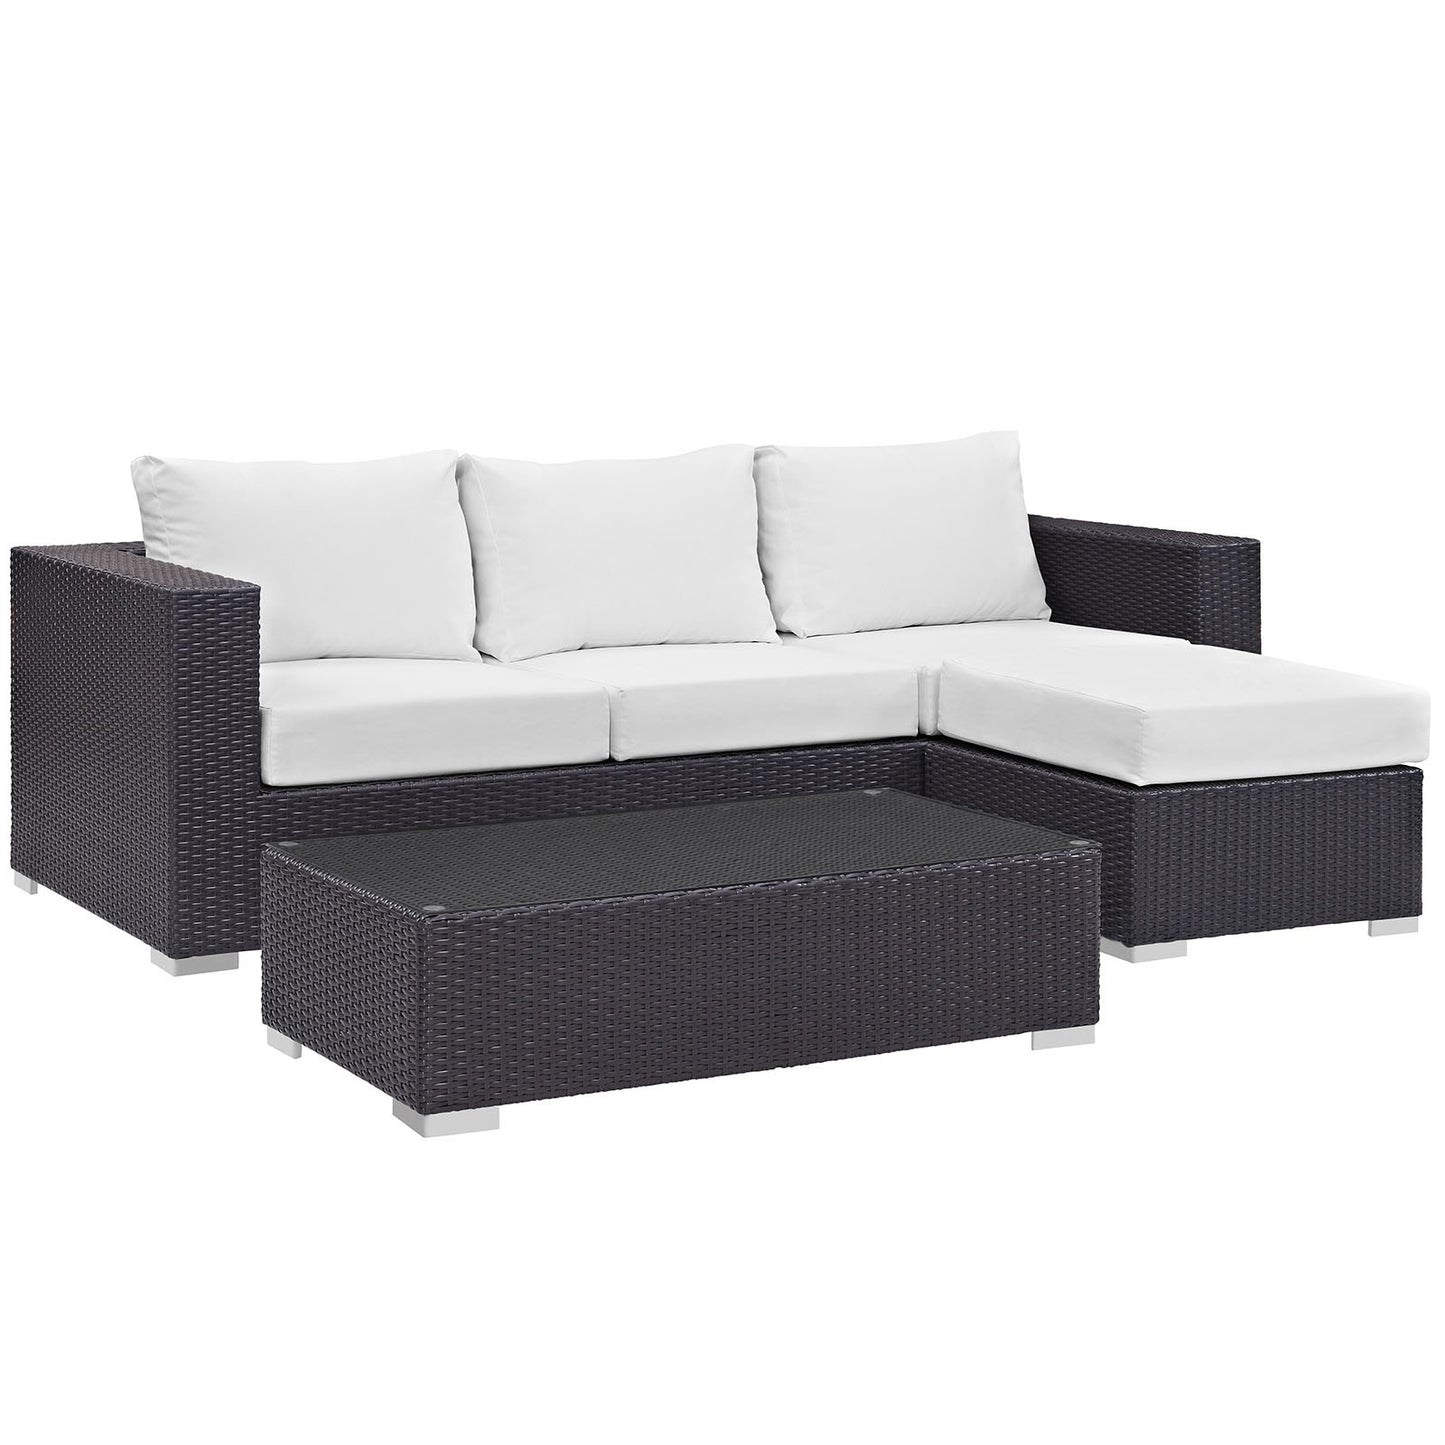 Modway Convene 3-Piece Outdoor Wicker Sofa Set, Espresso/White